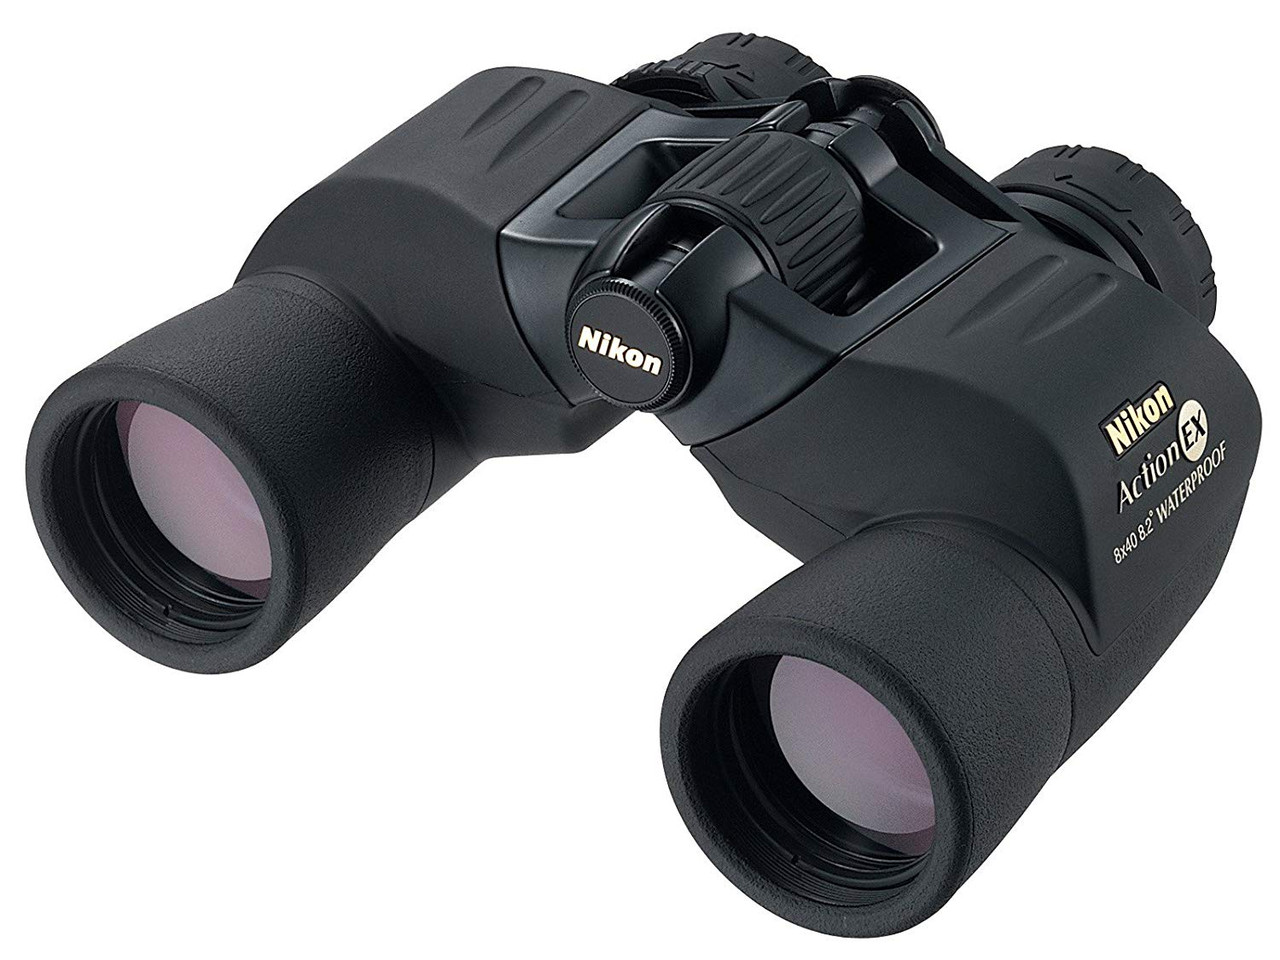 Nikon Action Extreme All Terrain Binocular, 8x40, Black - 7238